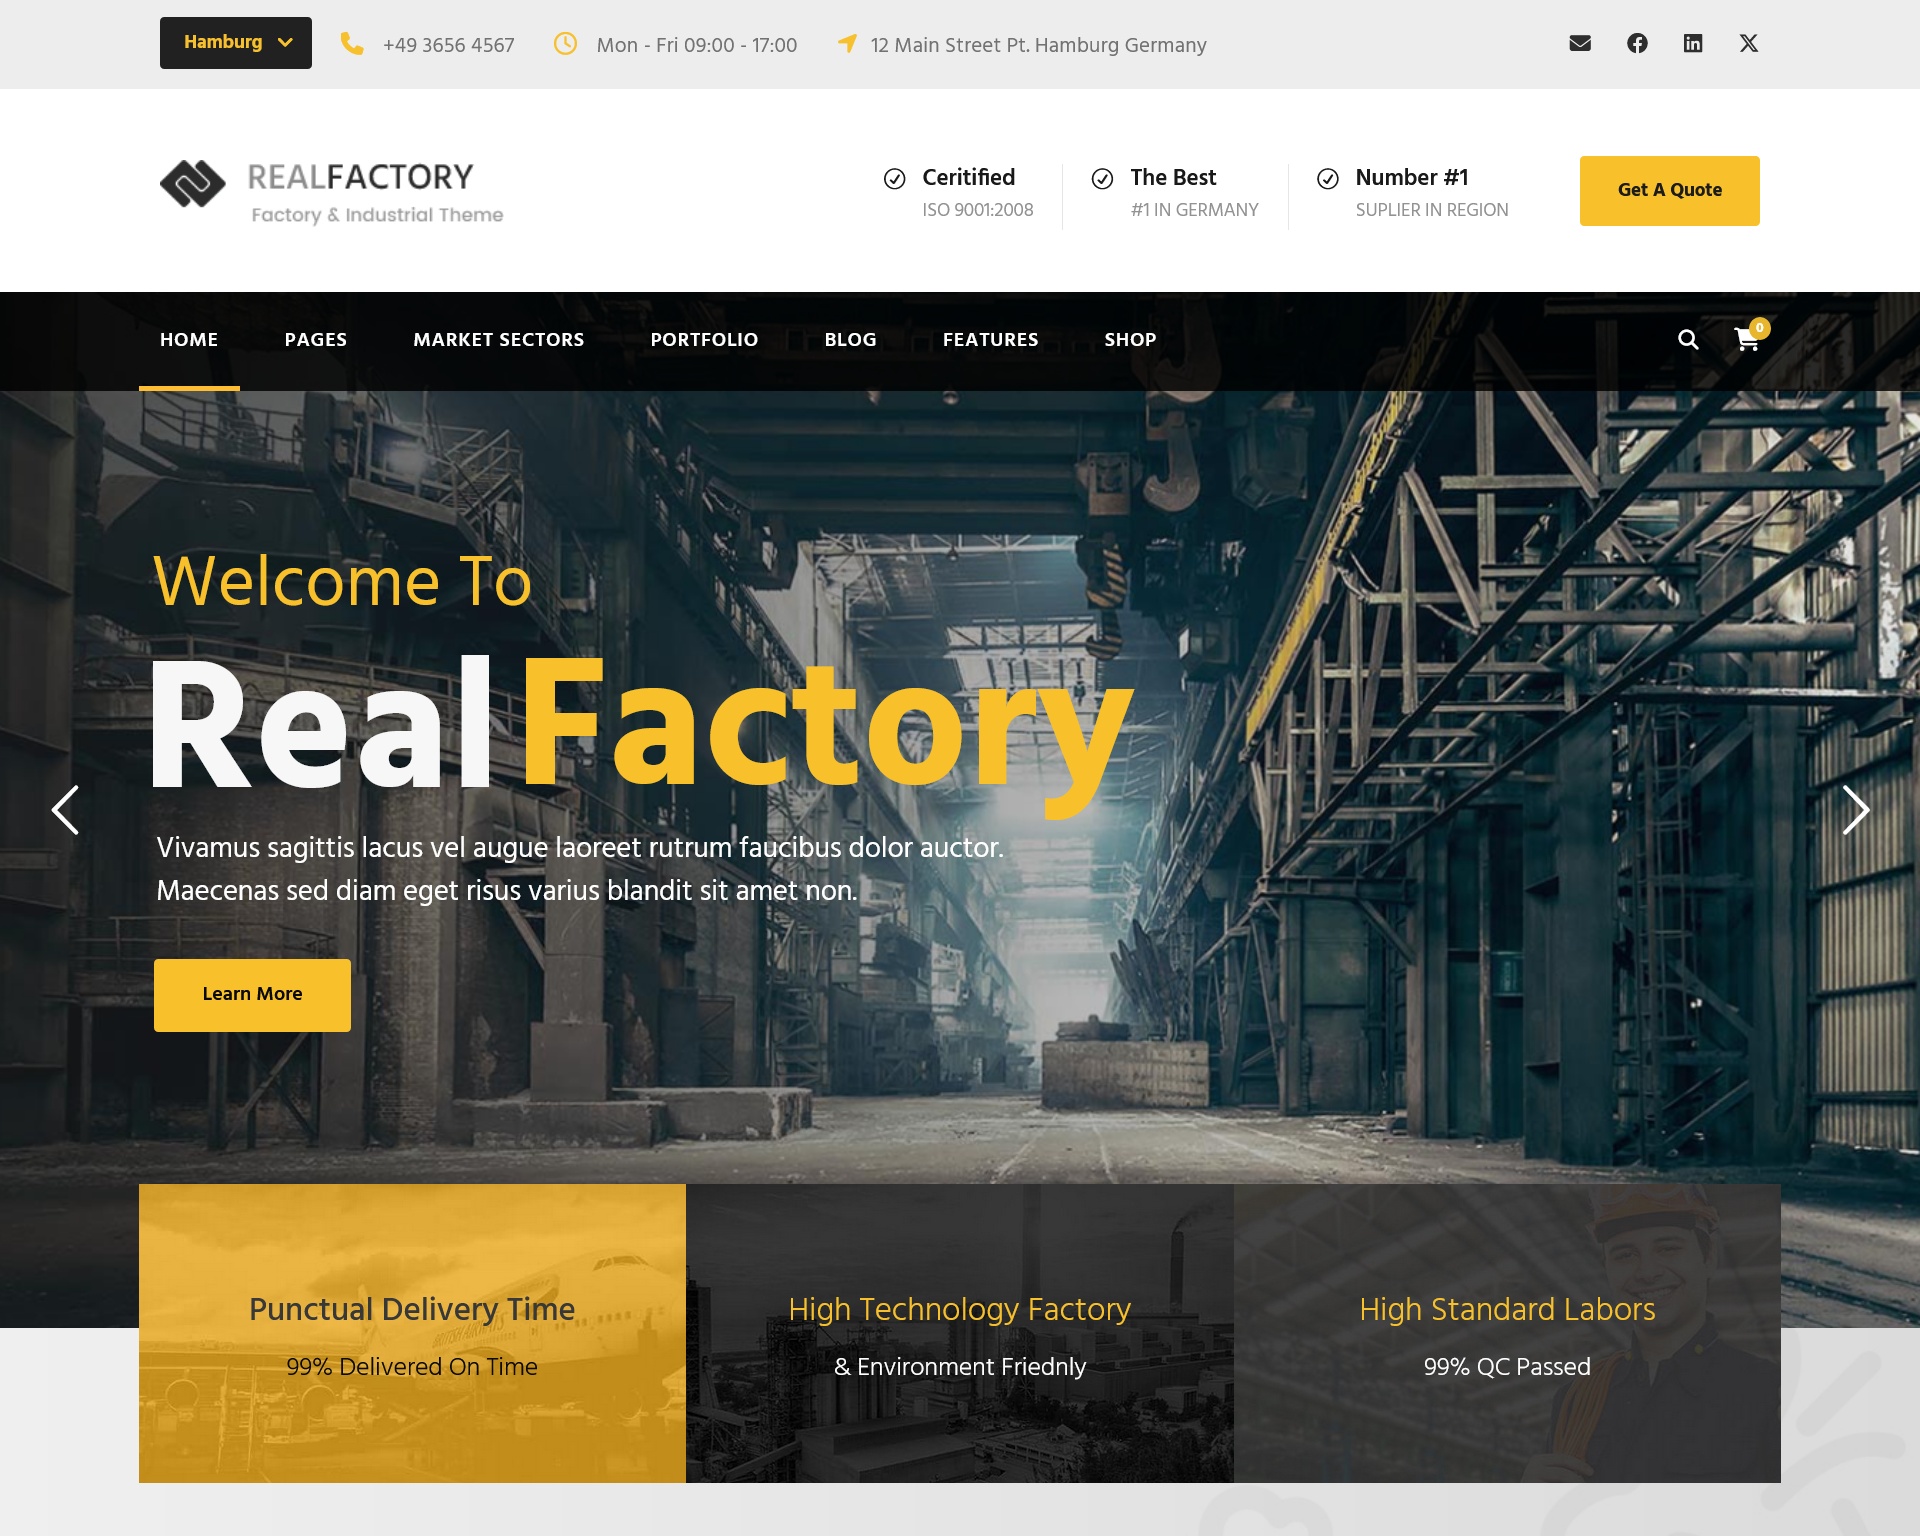 Real Factory WordPress Theme